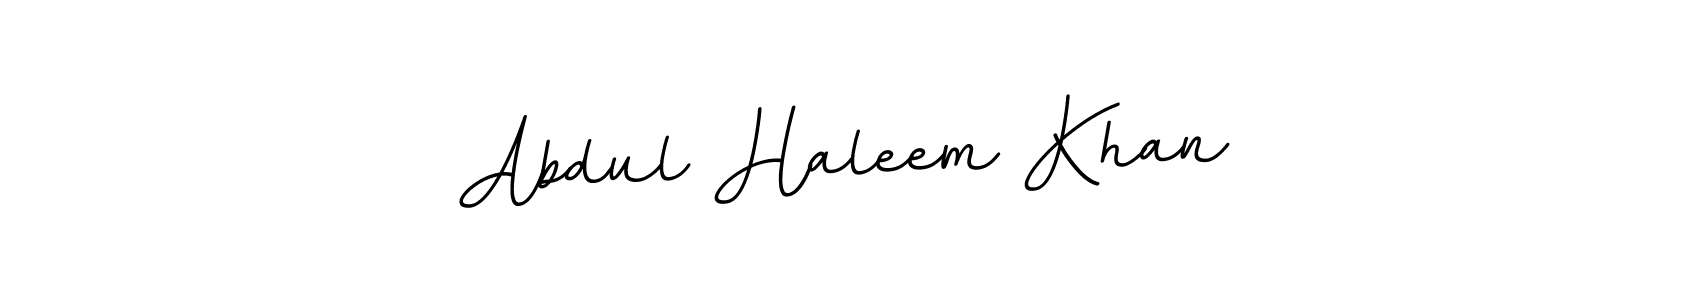 How to Draw Abdul Haleem Khan signature style? BallpointsItalic-DORy9 is a latest design signature styles for name Abdul Haleem Khan. Abdul Haleem Khan signature style 11 images and pictures png